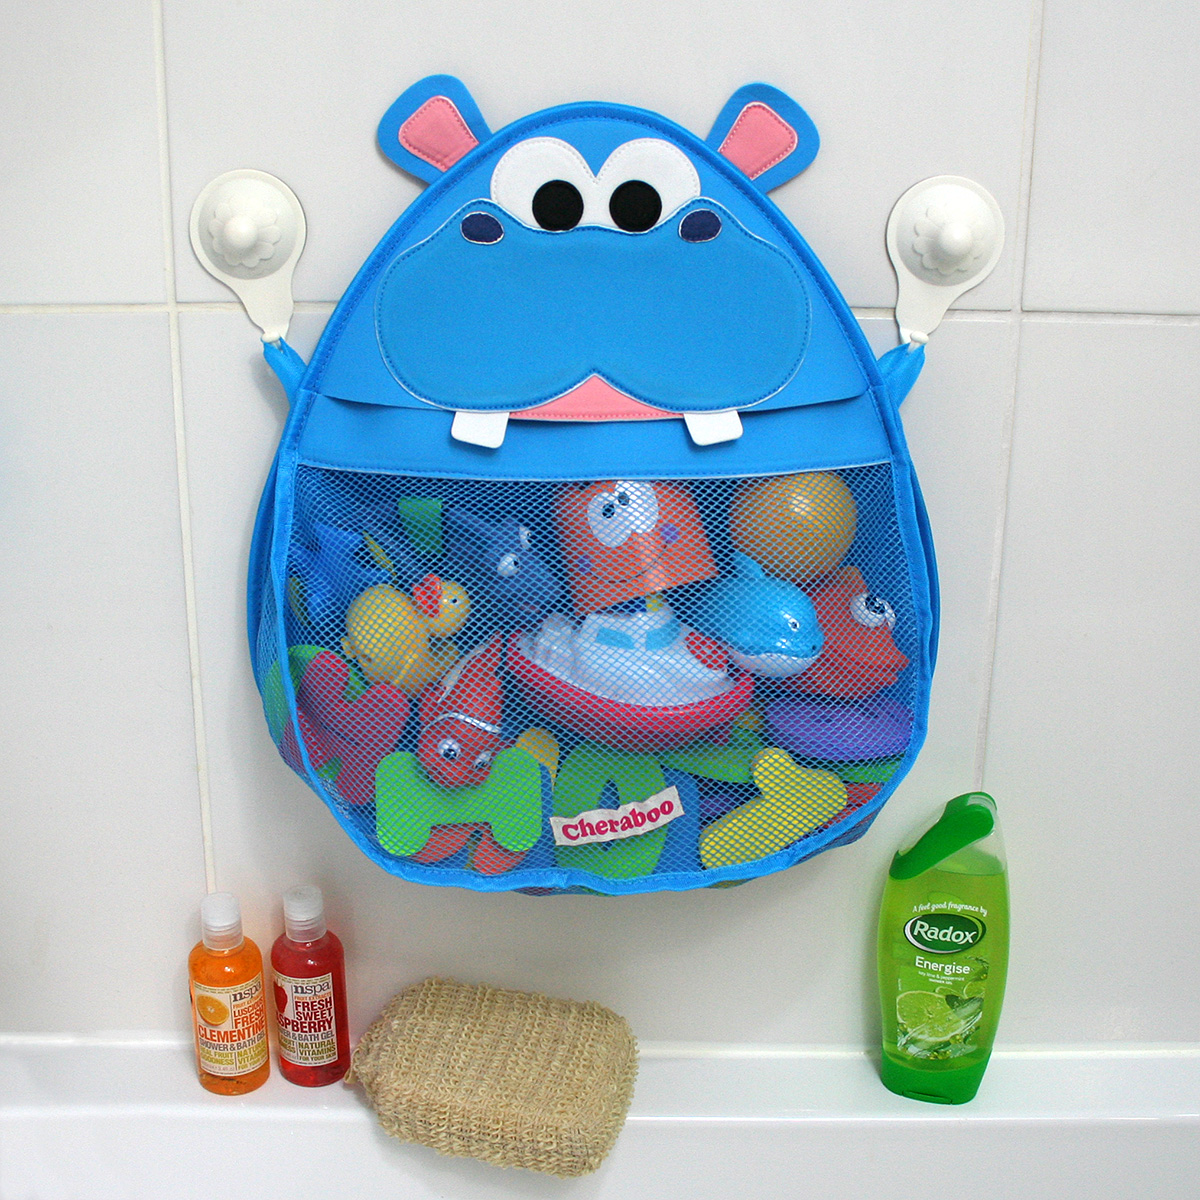 Hurley Hippo bath toy organizer